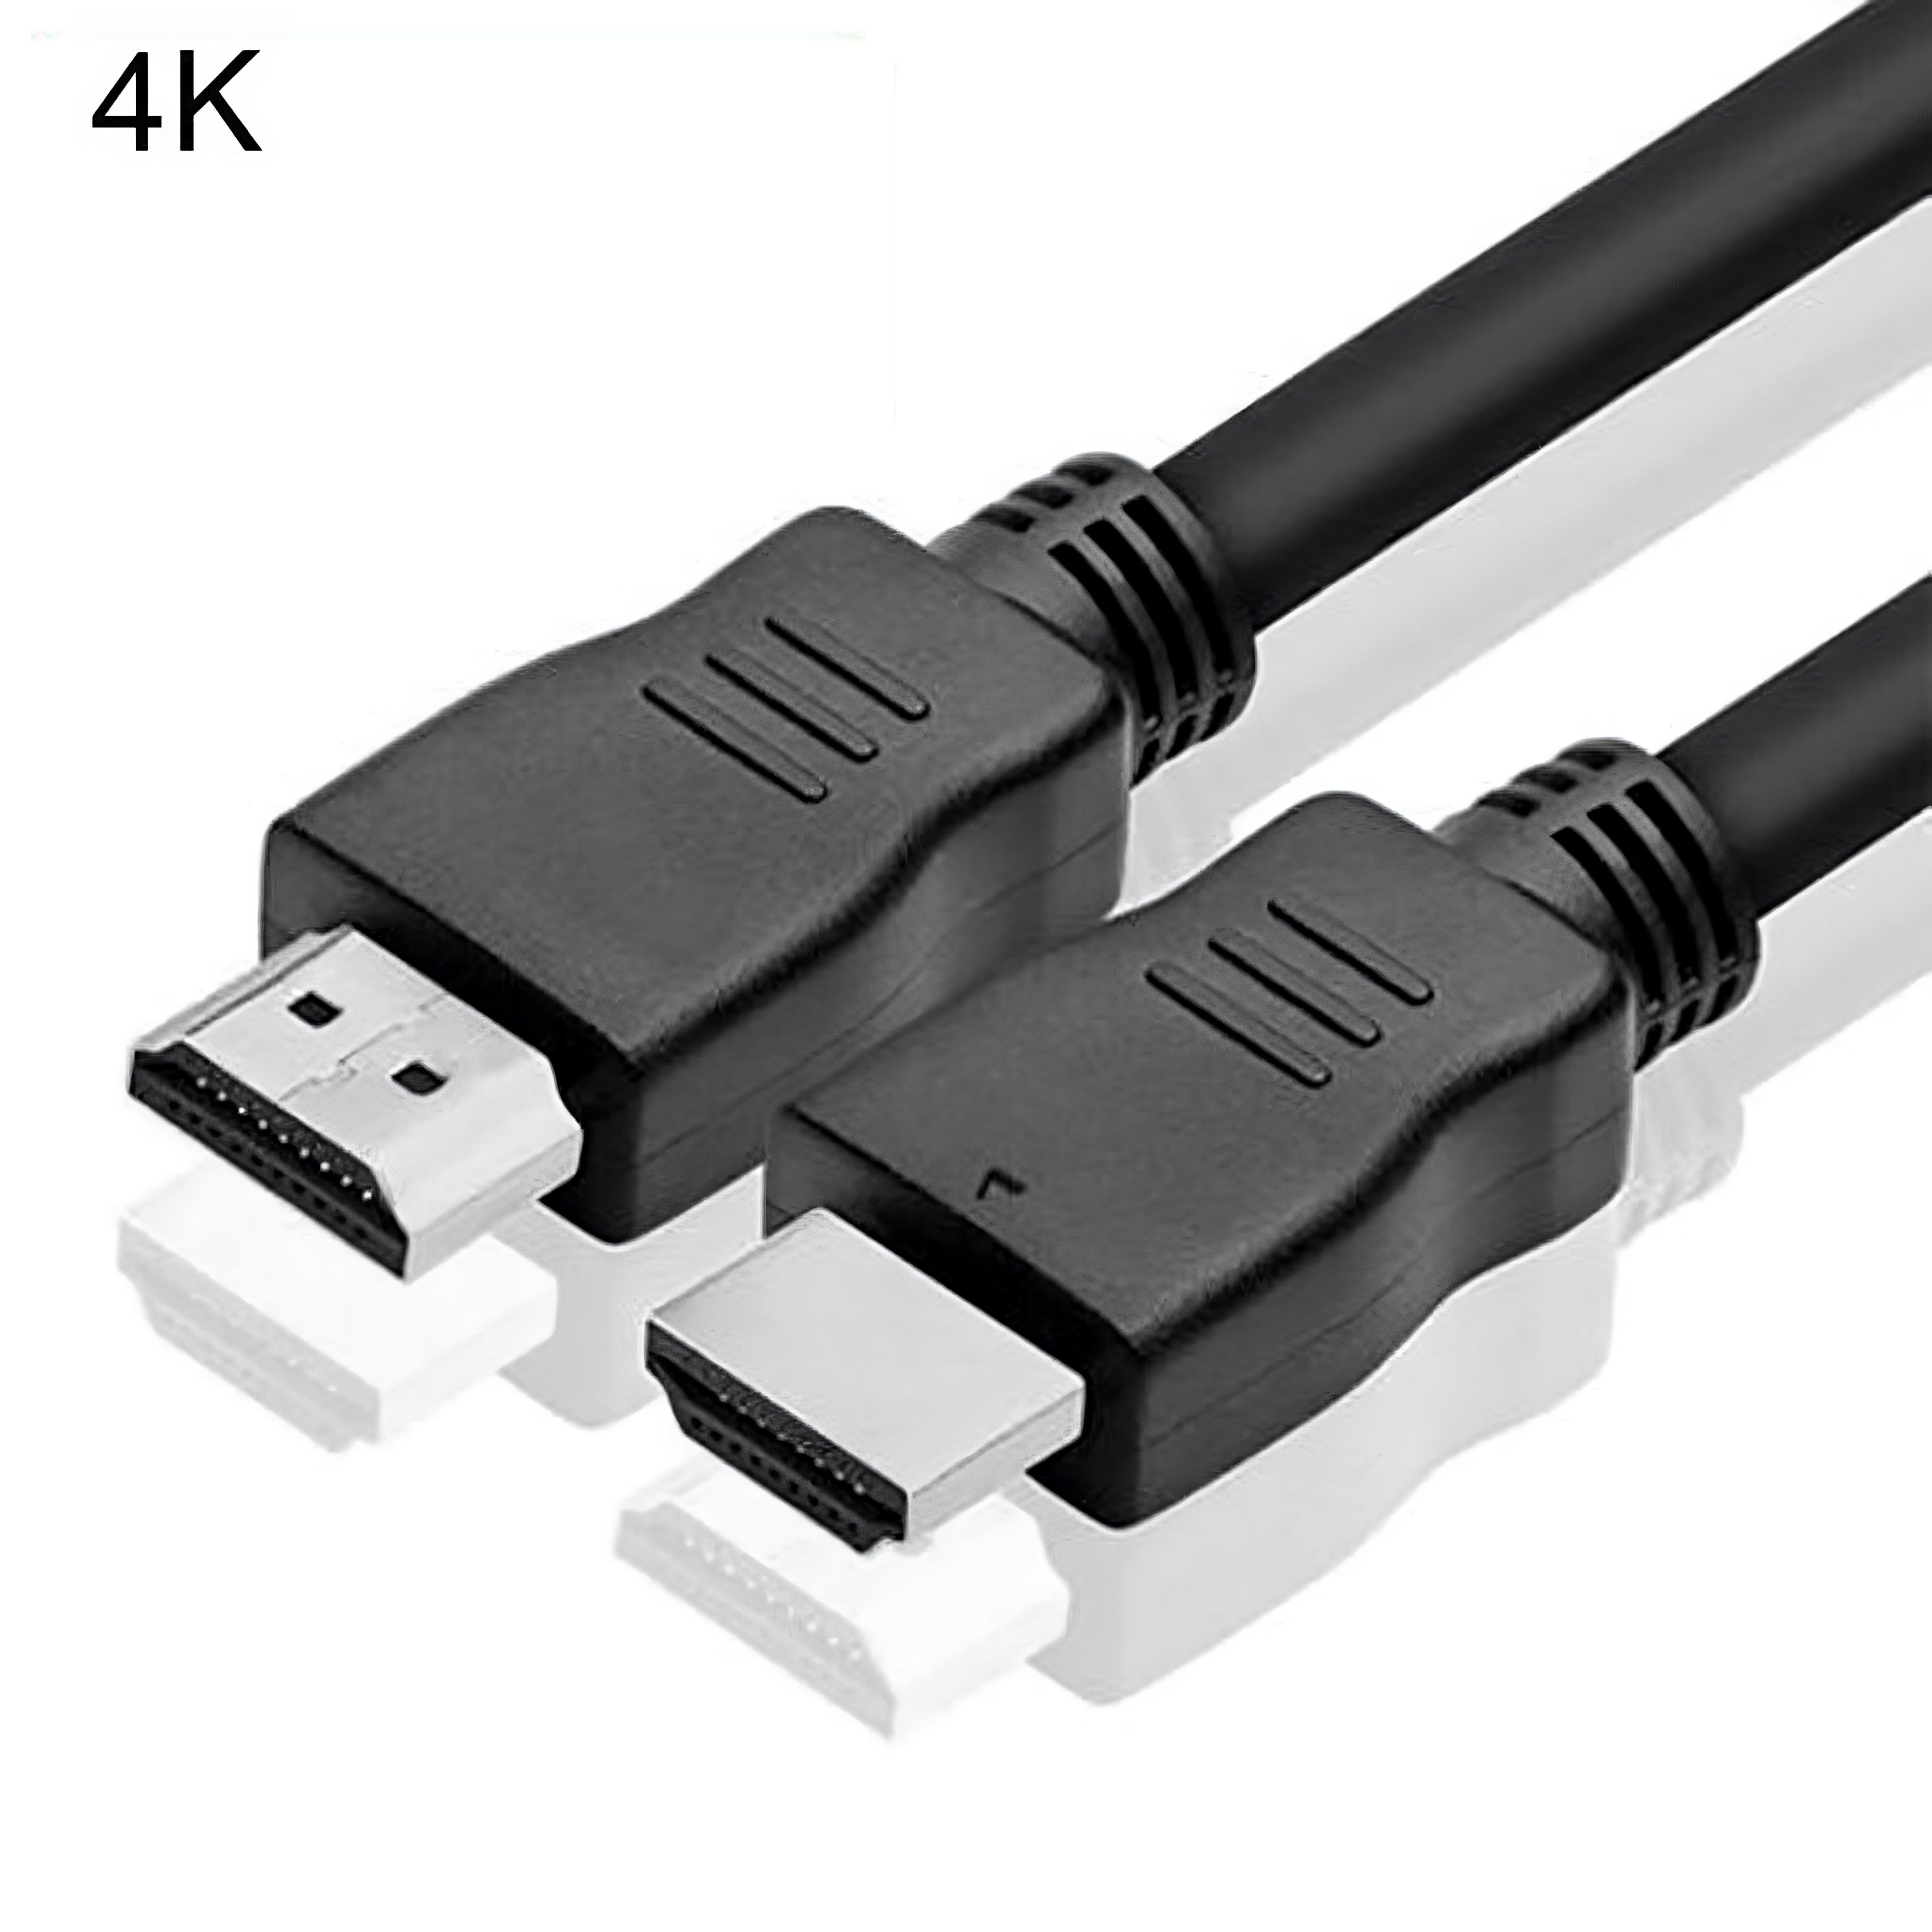 Ogeled HDMI Kabel 1.8m 4K High Speed für FULL HD TV LCD PS4 Xbox HDMI-Kabel